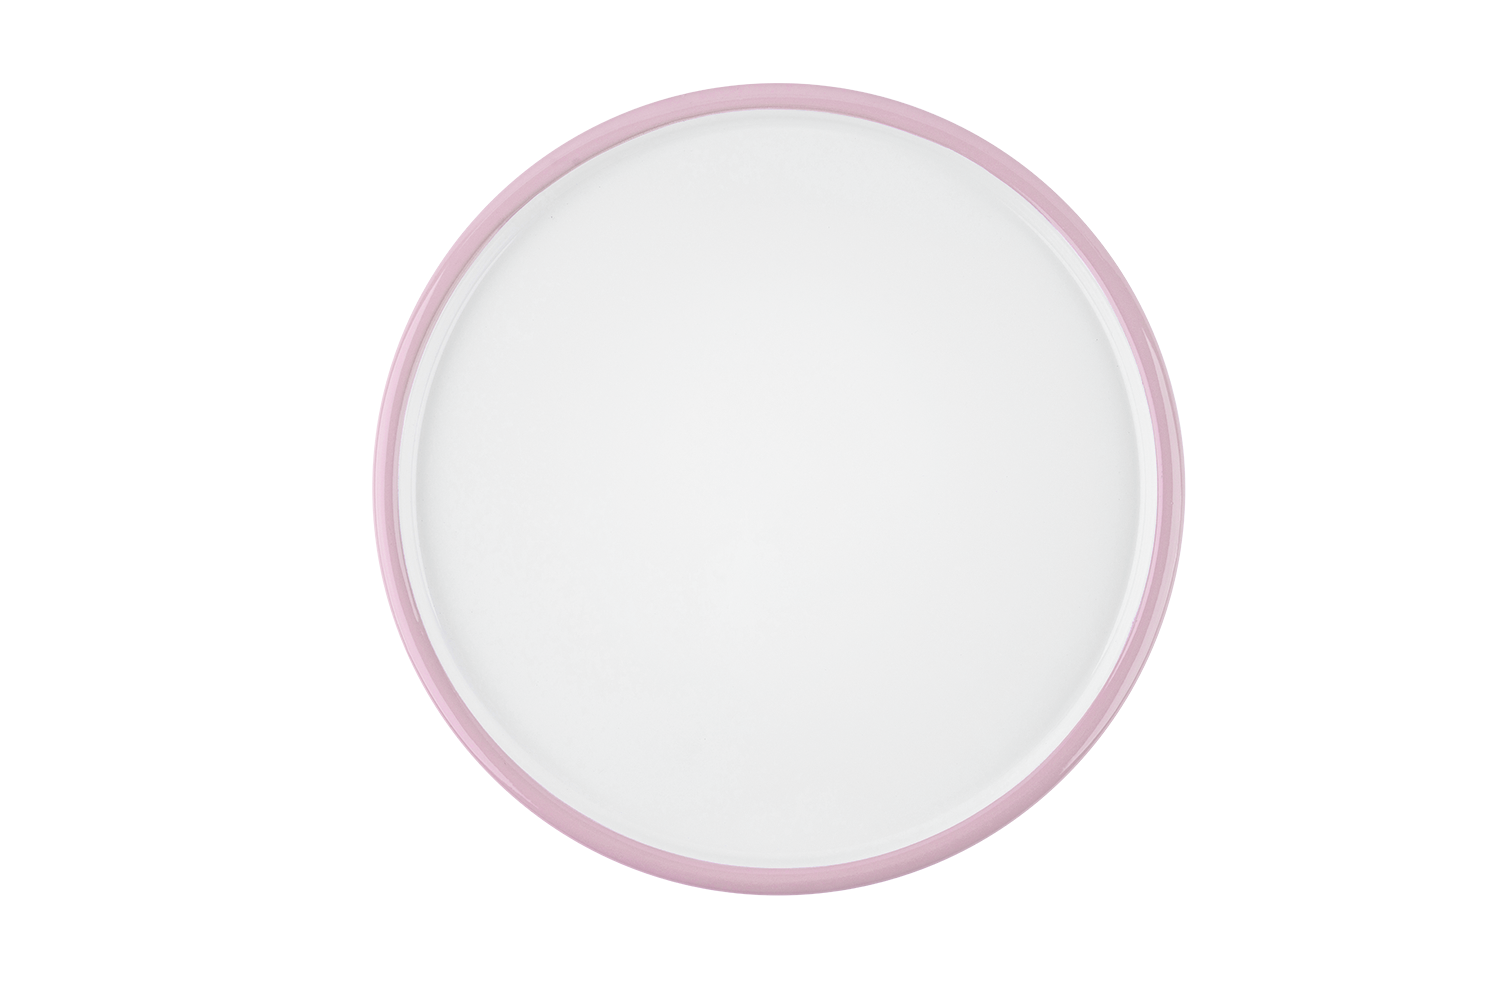 Blick auf das rosafarbene Emaille-Pizzablech